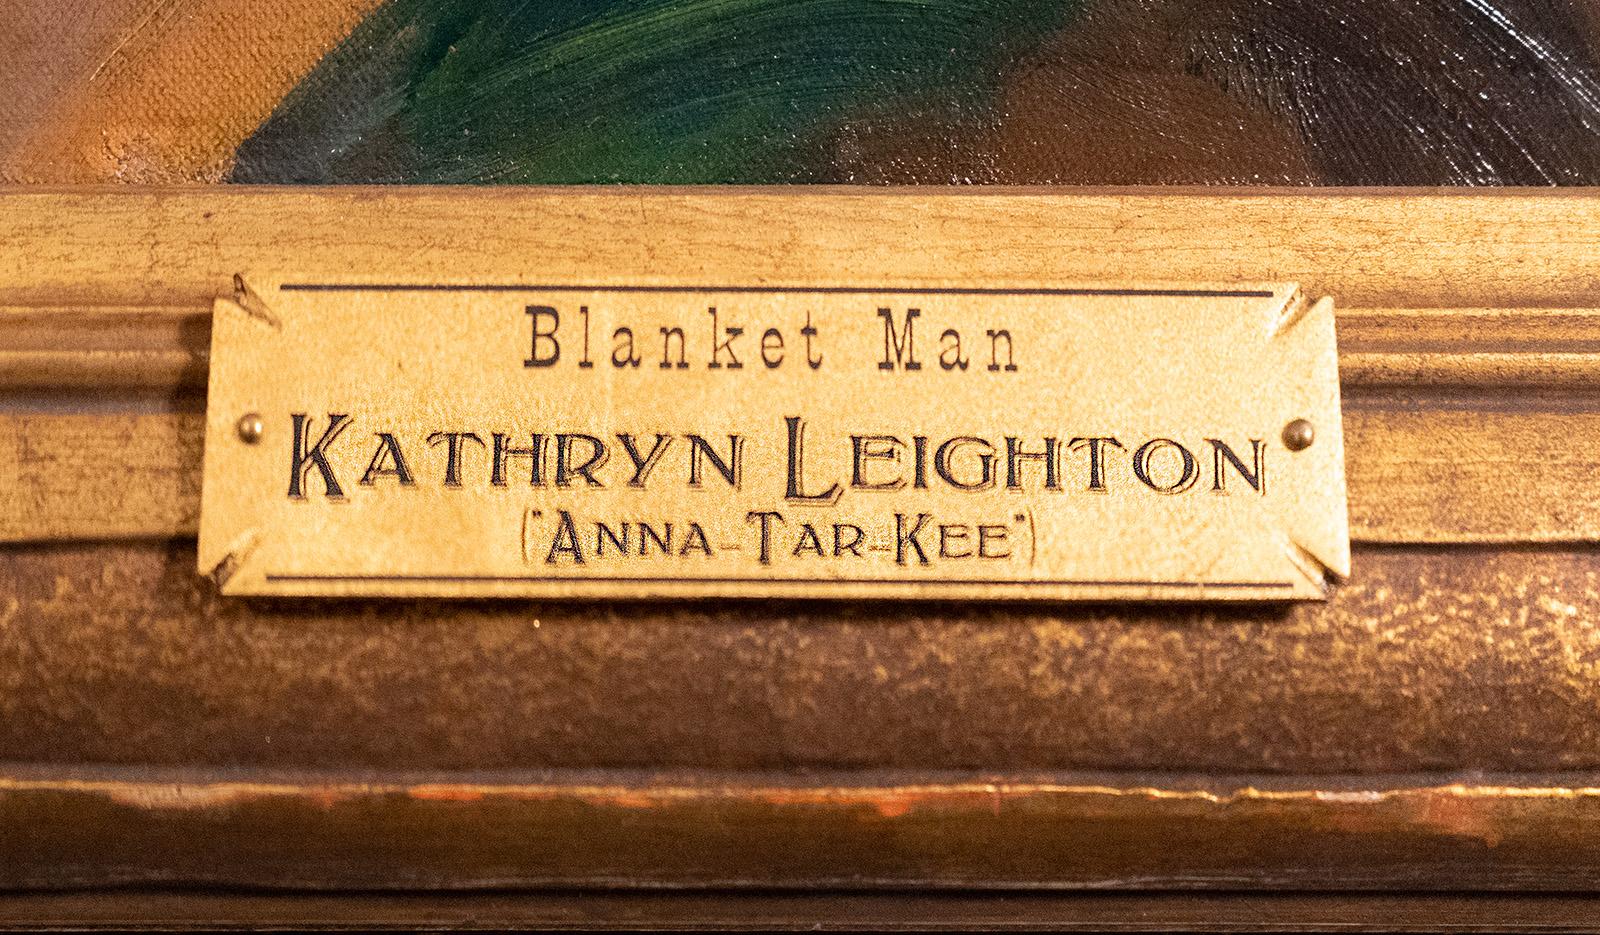 The Blanket Man by Kathryn Leighton 1